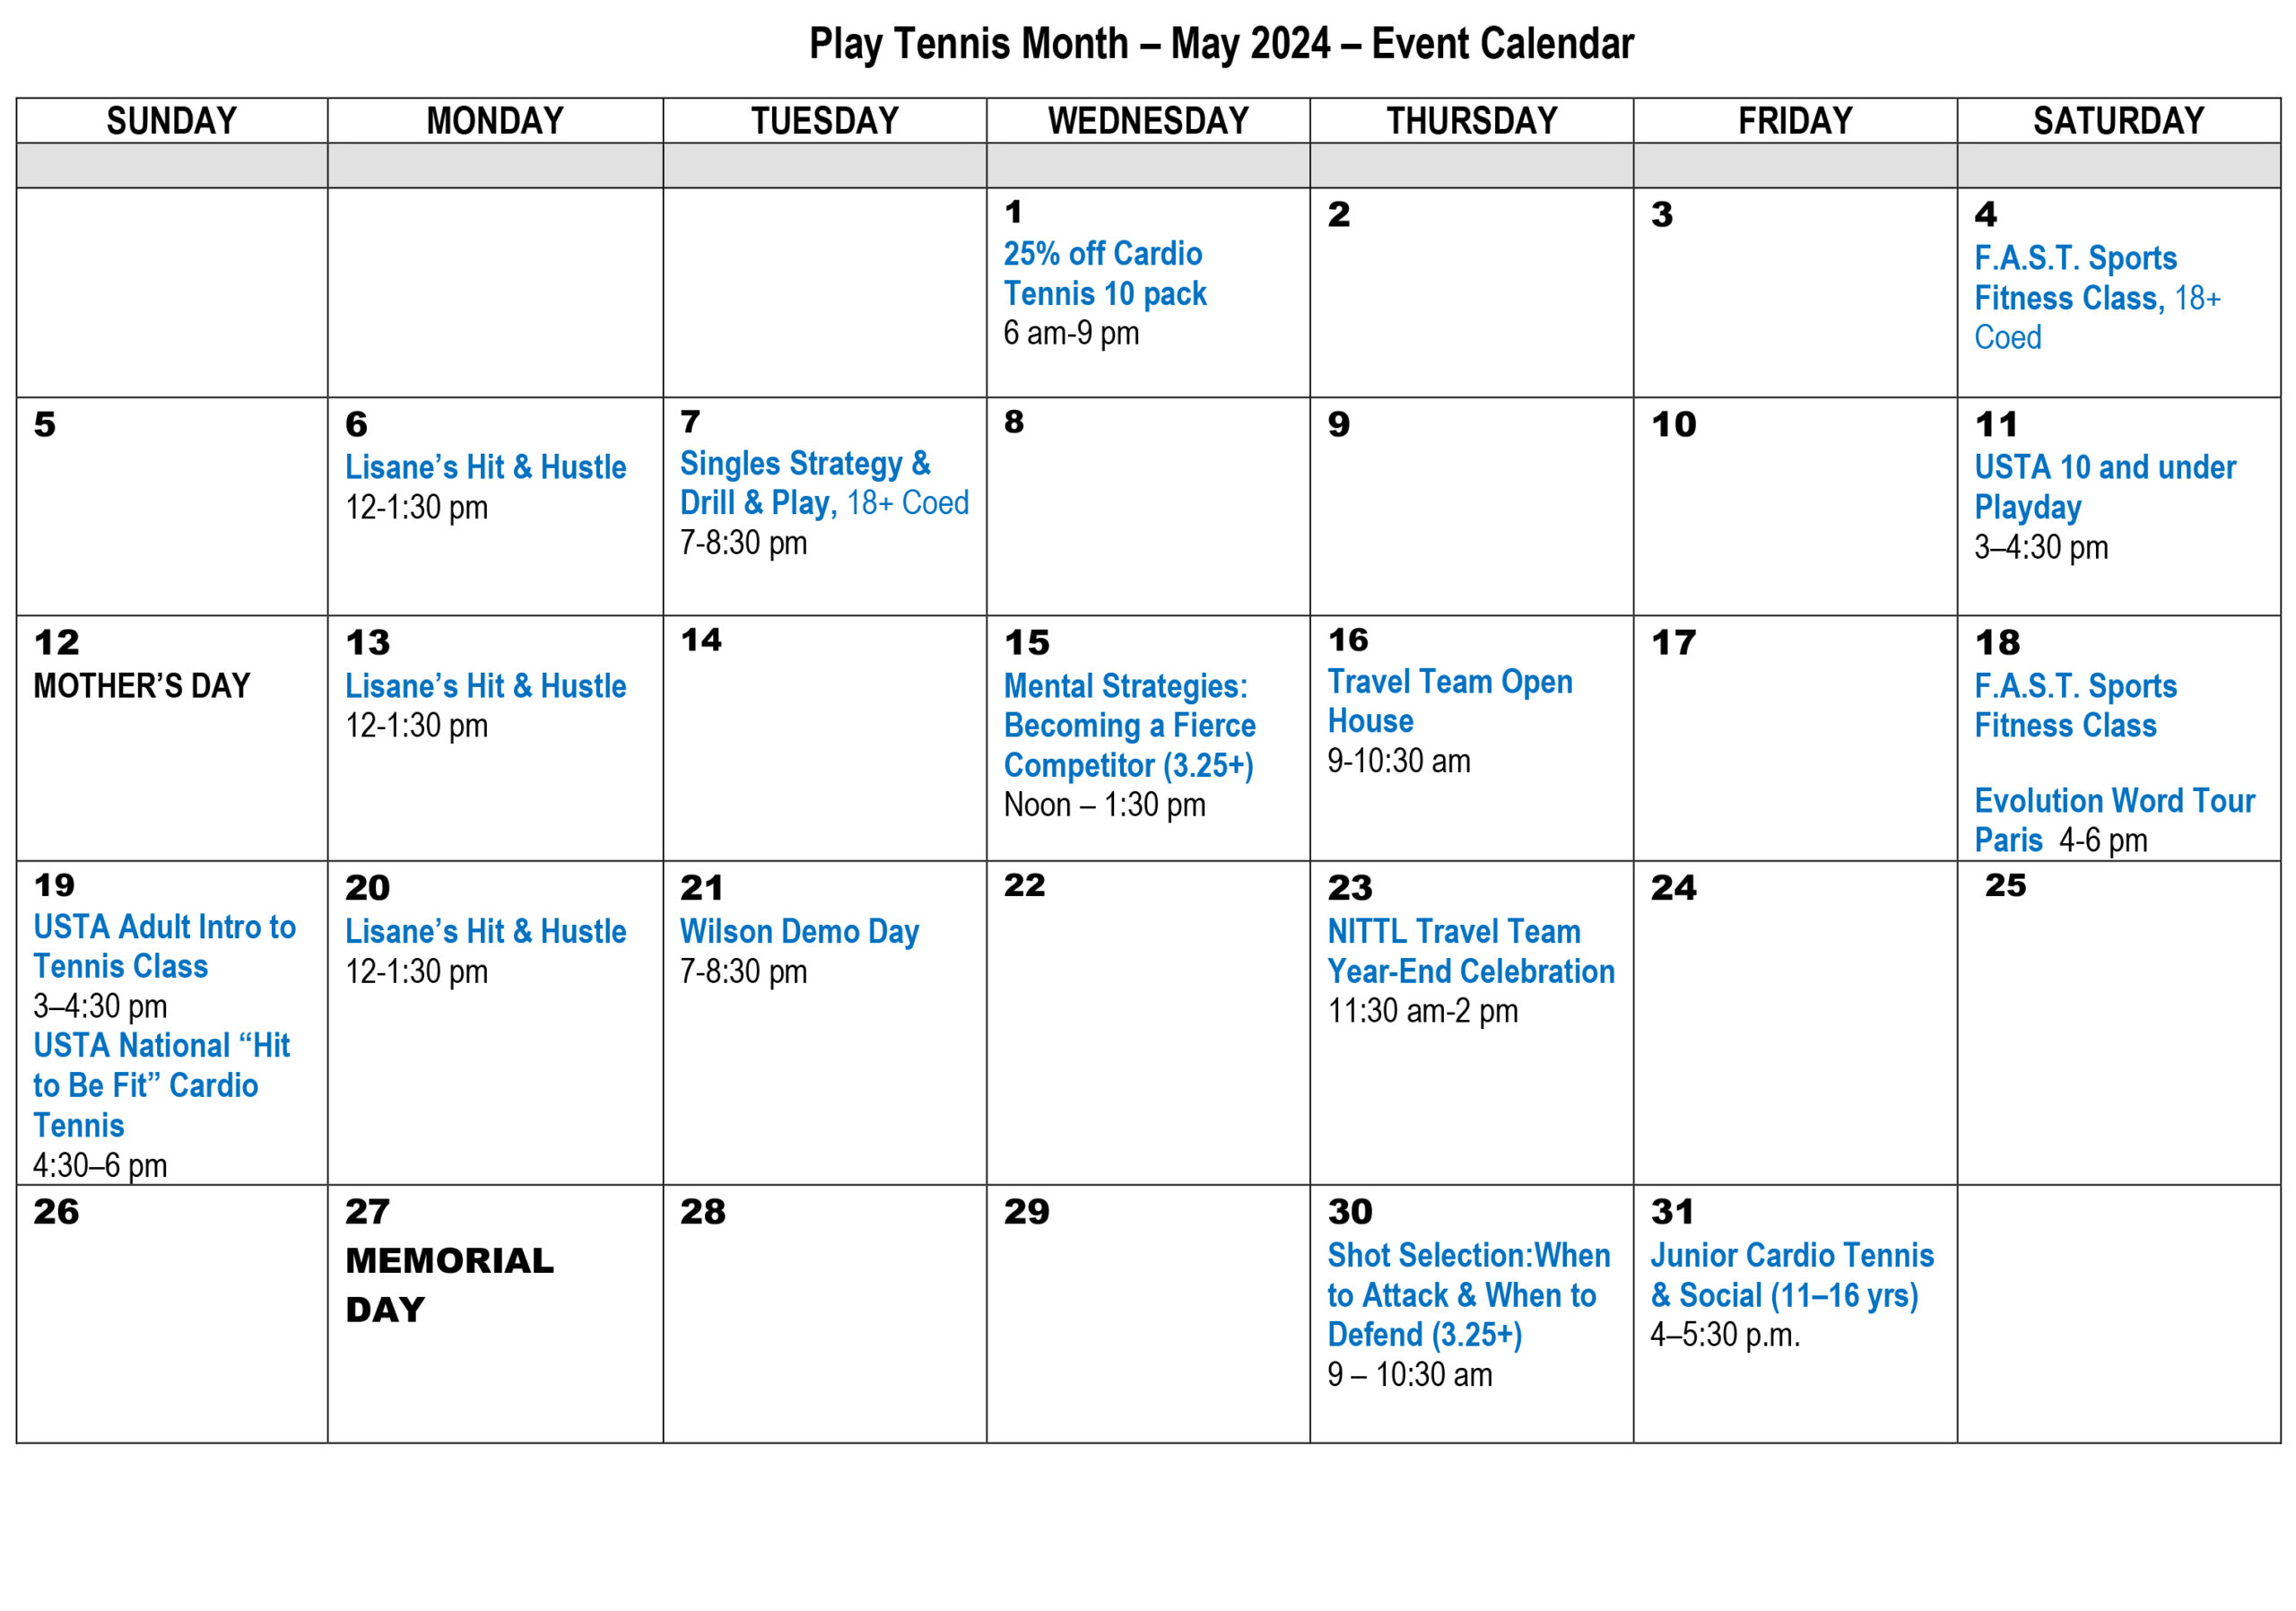 Event Calendar Tennis Month 2024 for website 5.14